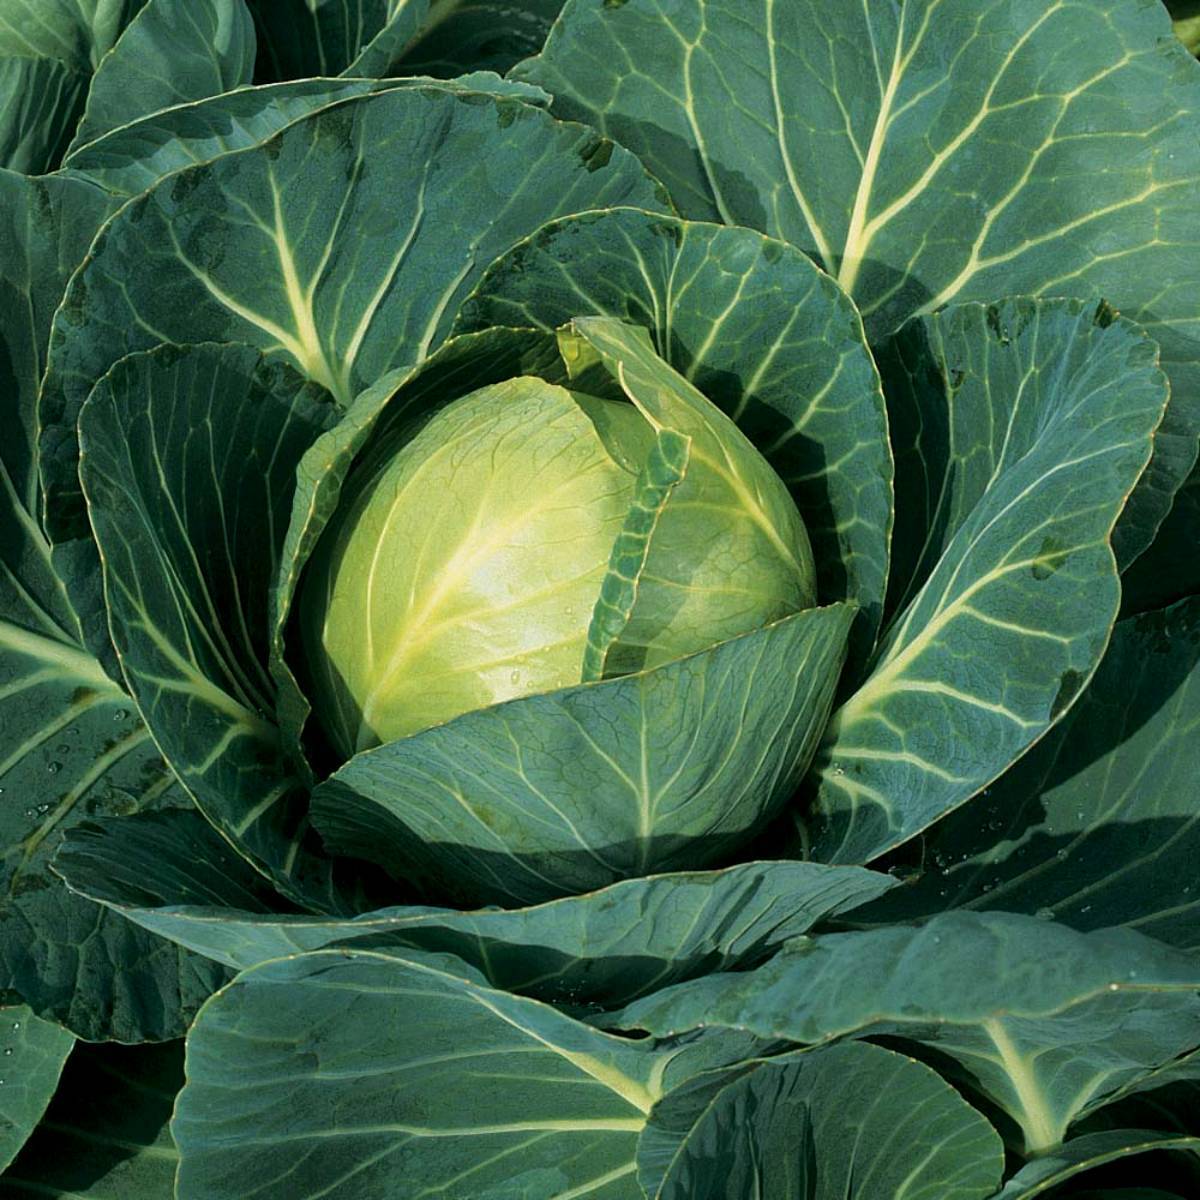 Cabbage Vegetable Seeds